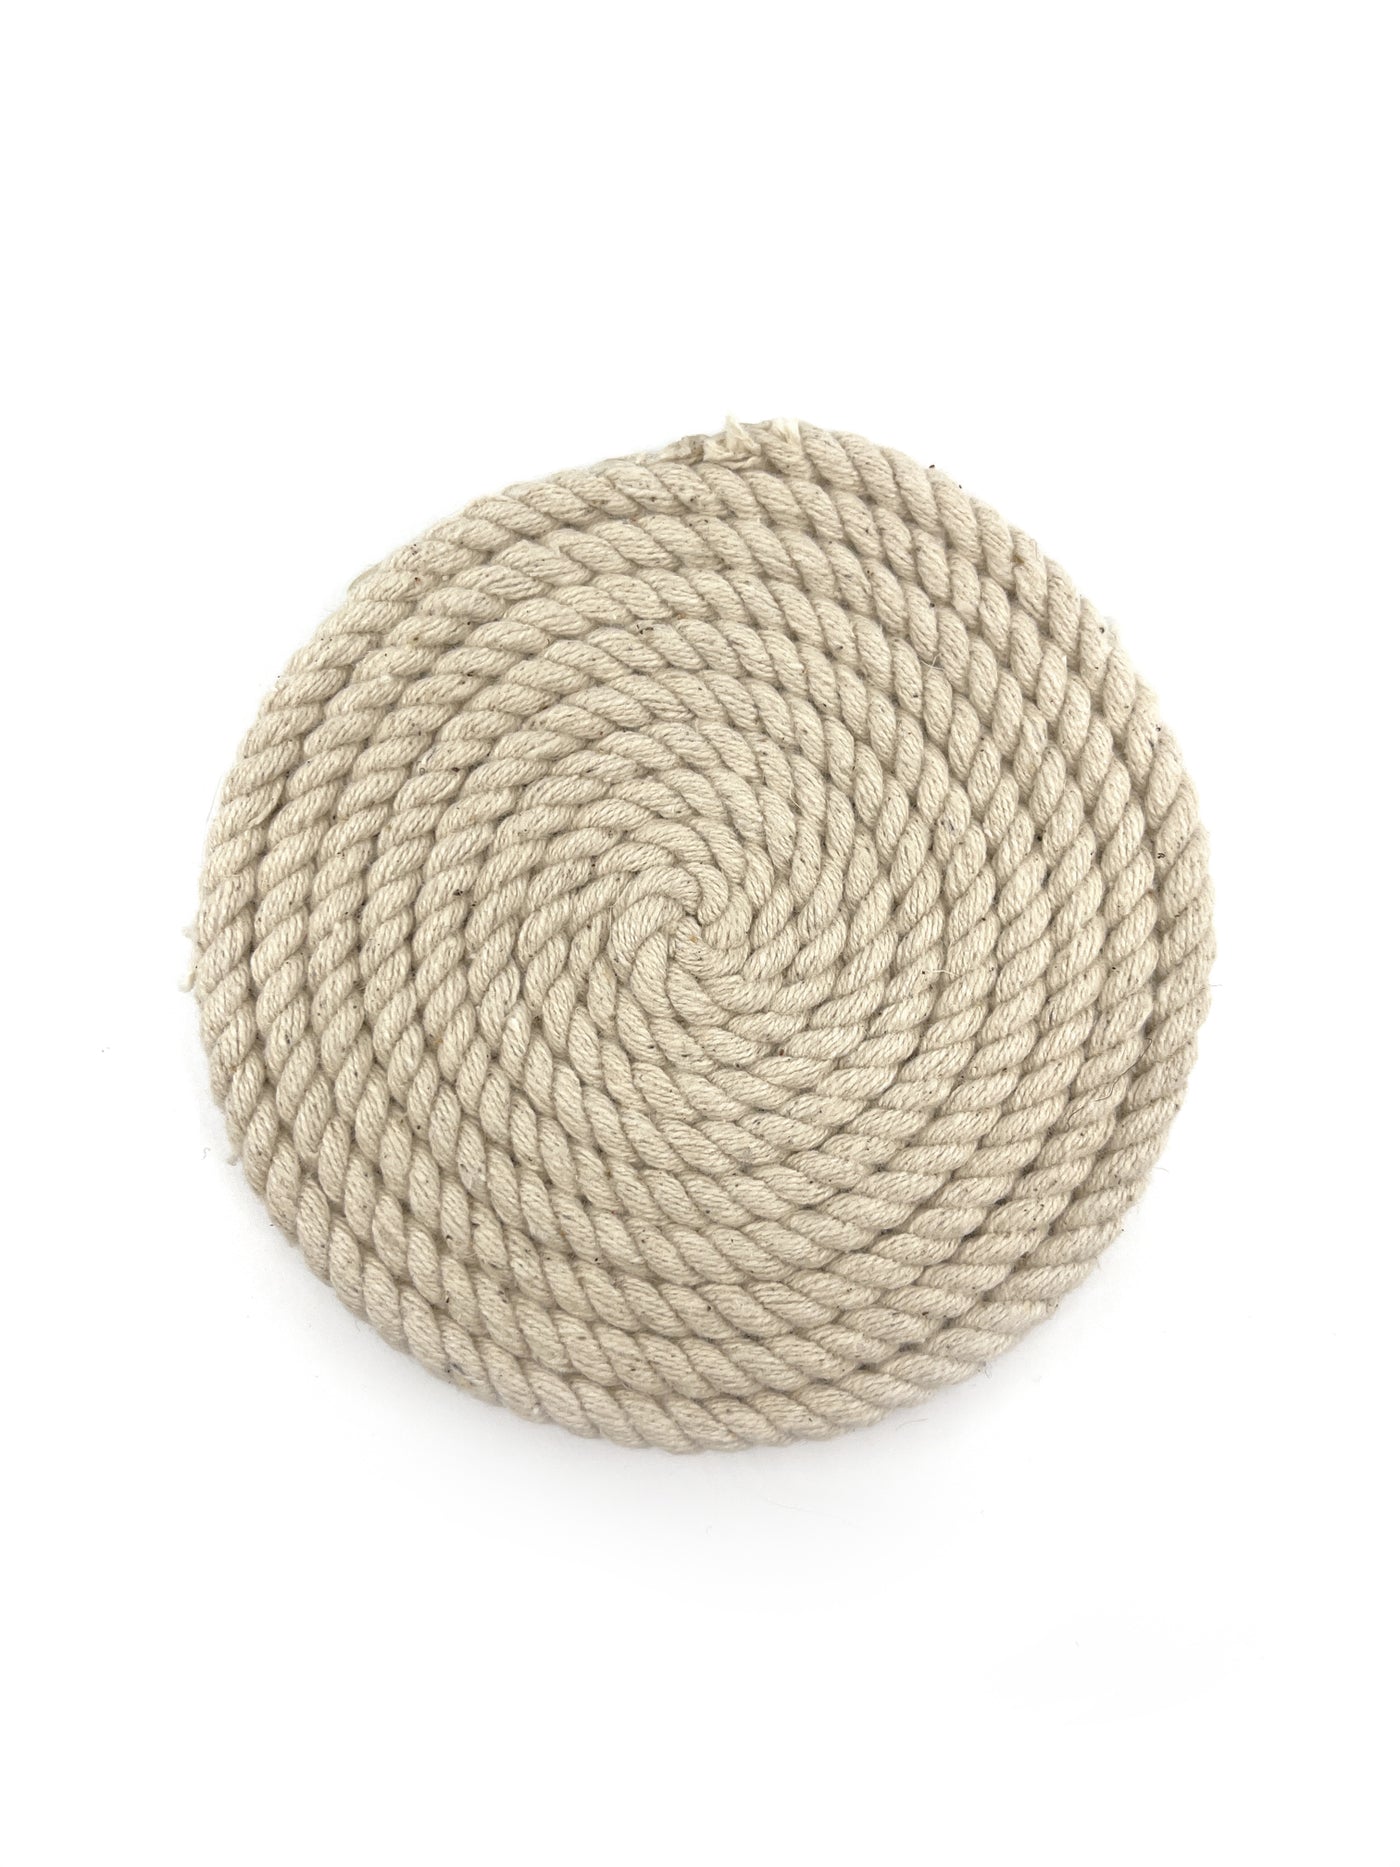 Miniature Round Rug